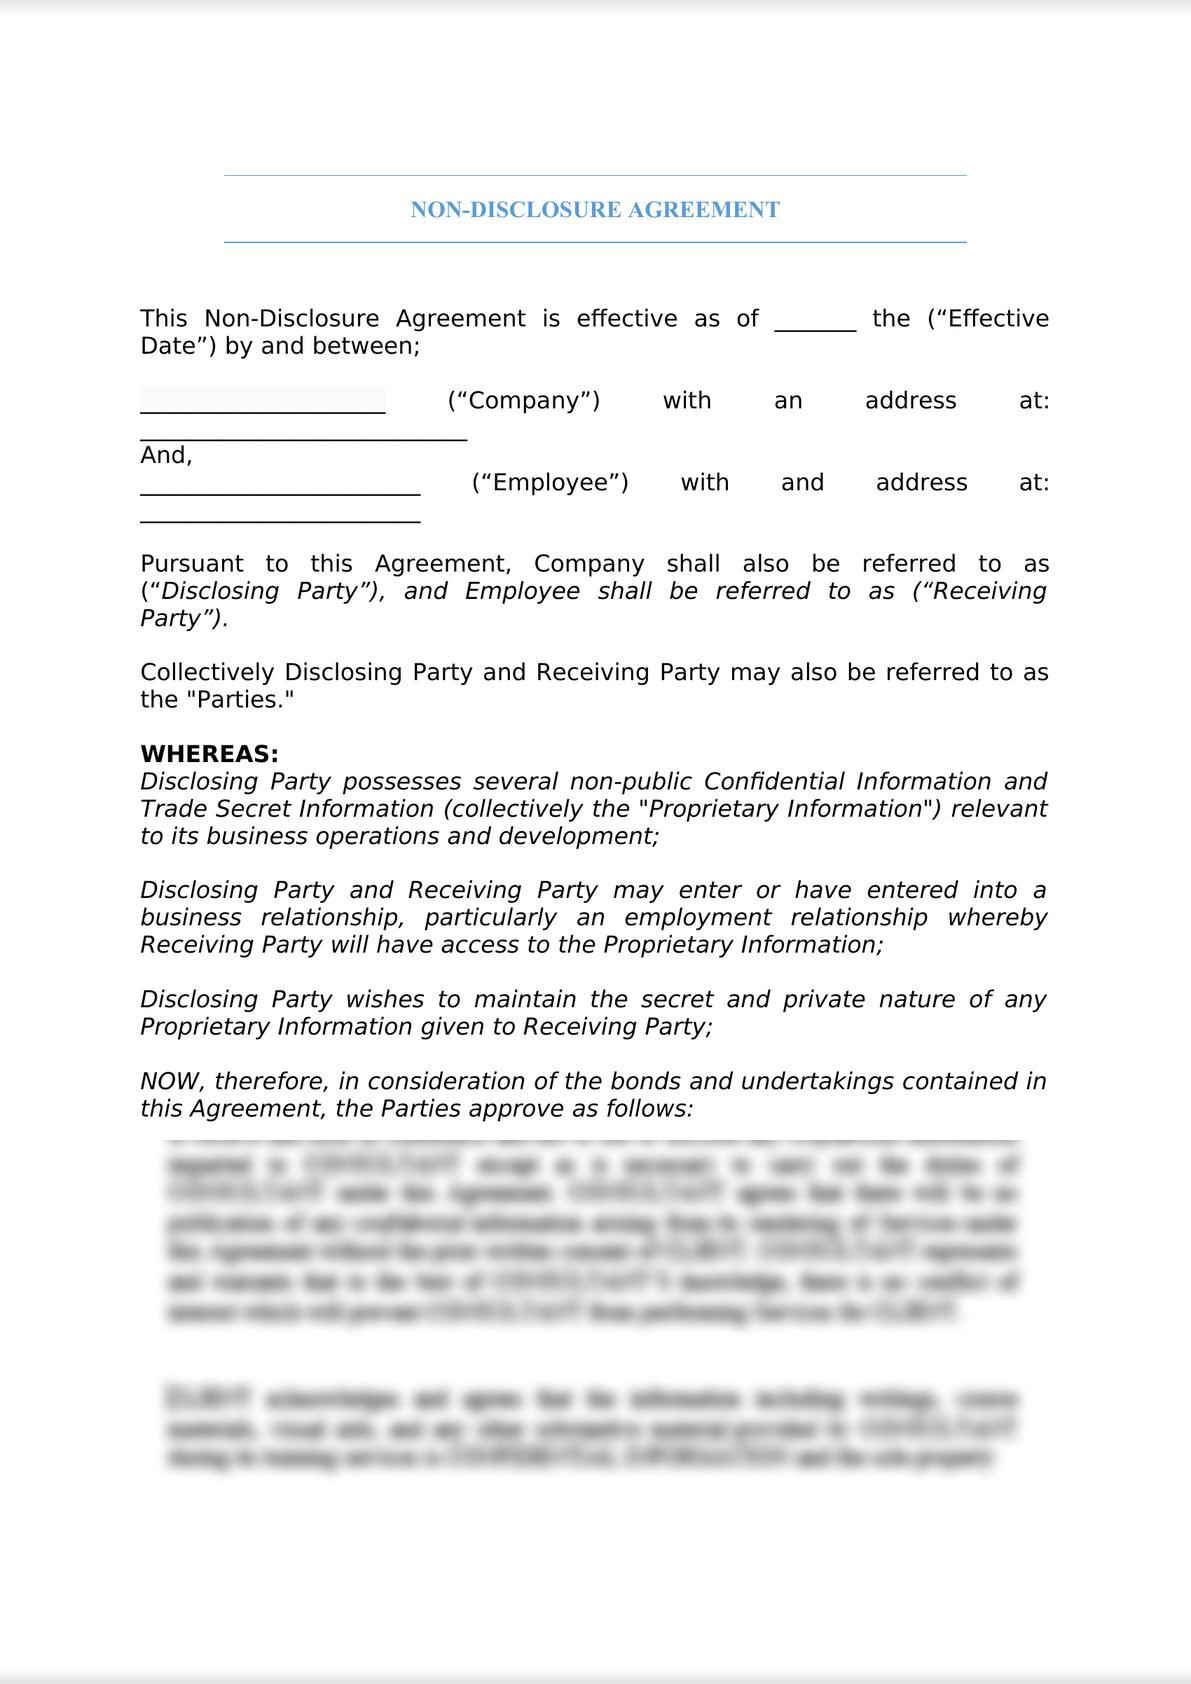 Employment/ Employee NDA (Non-Disclosure Agreement)-0